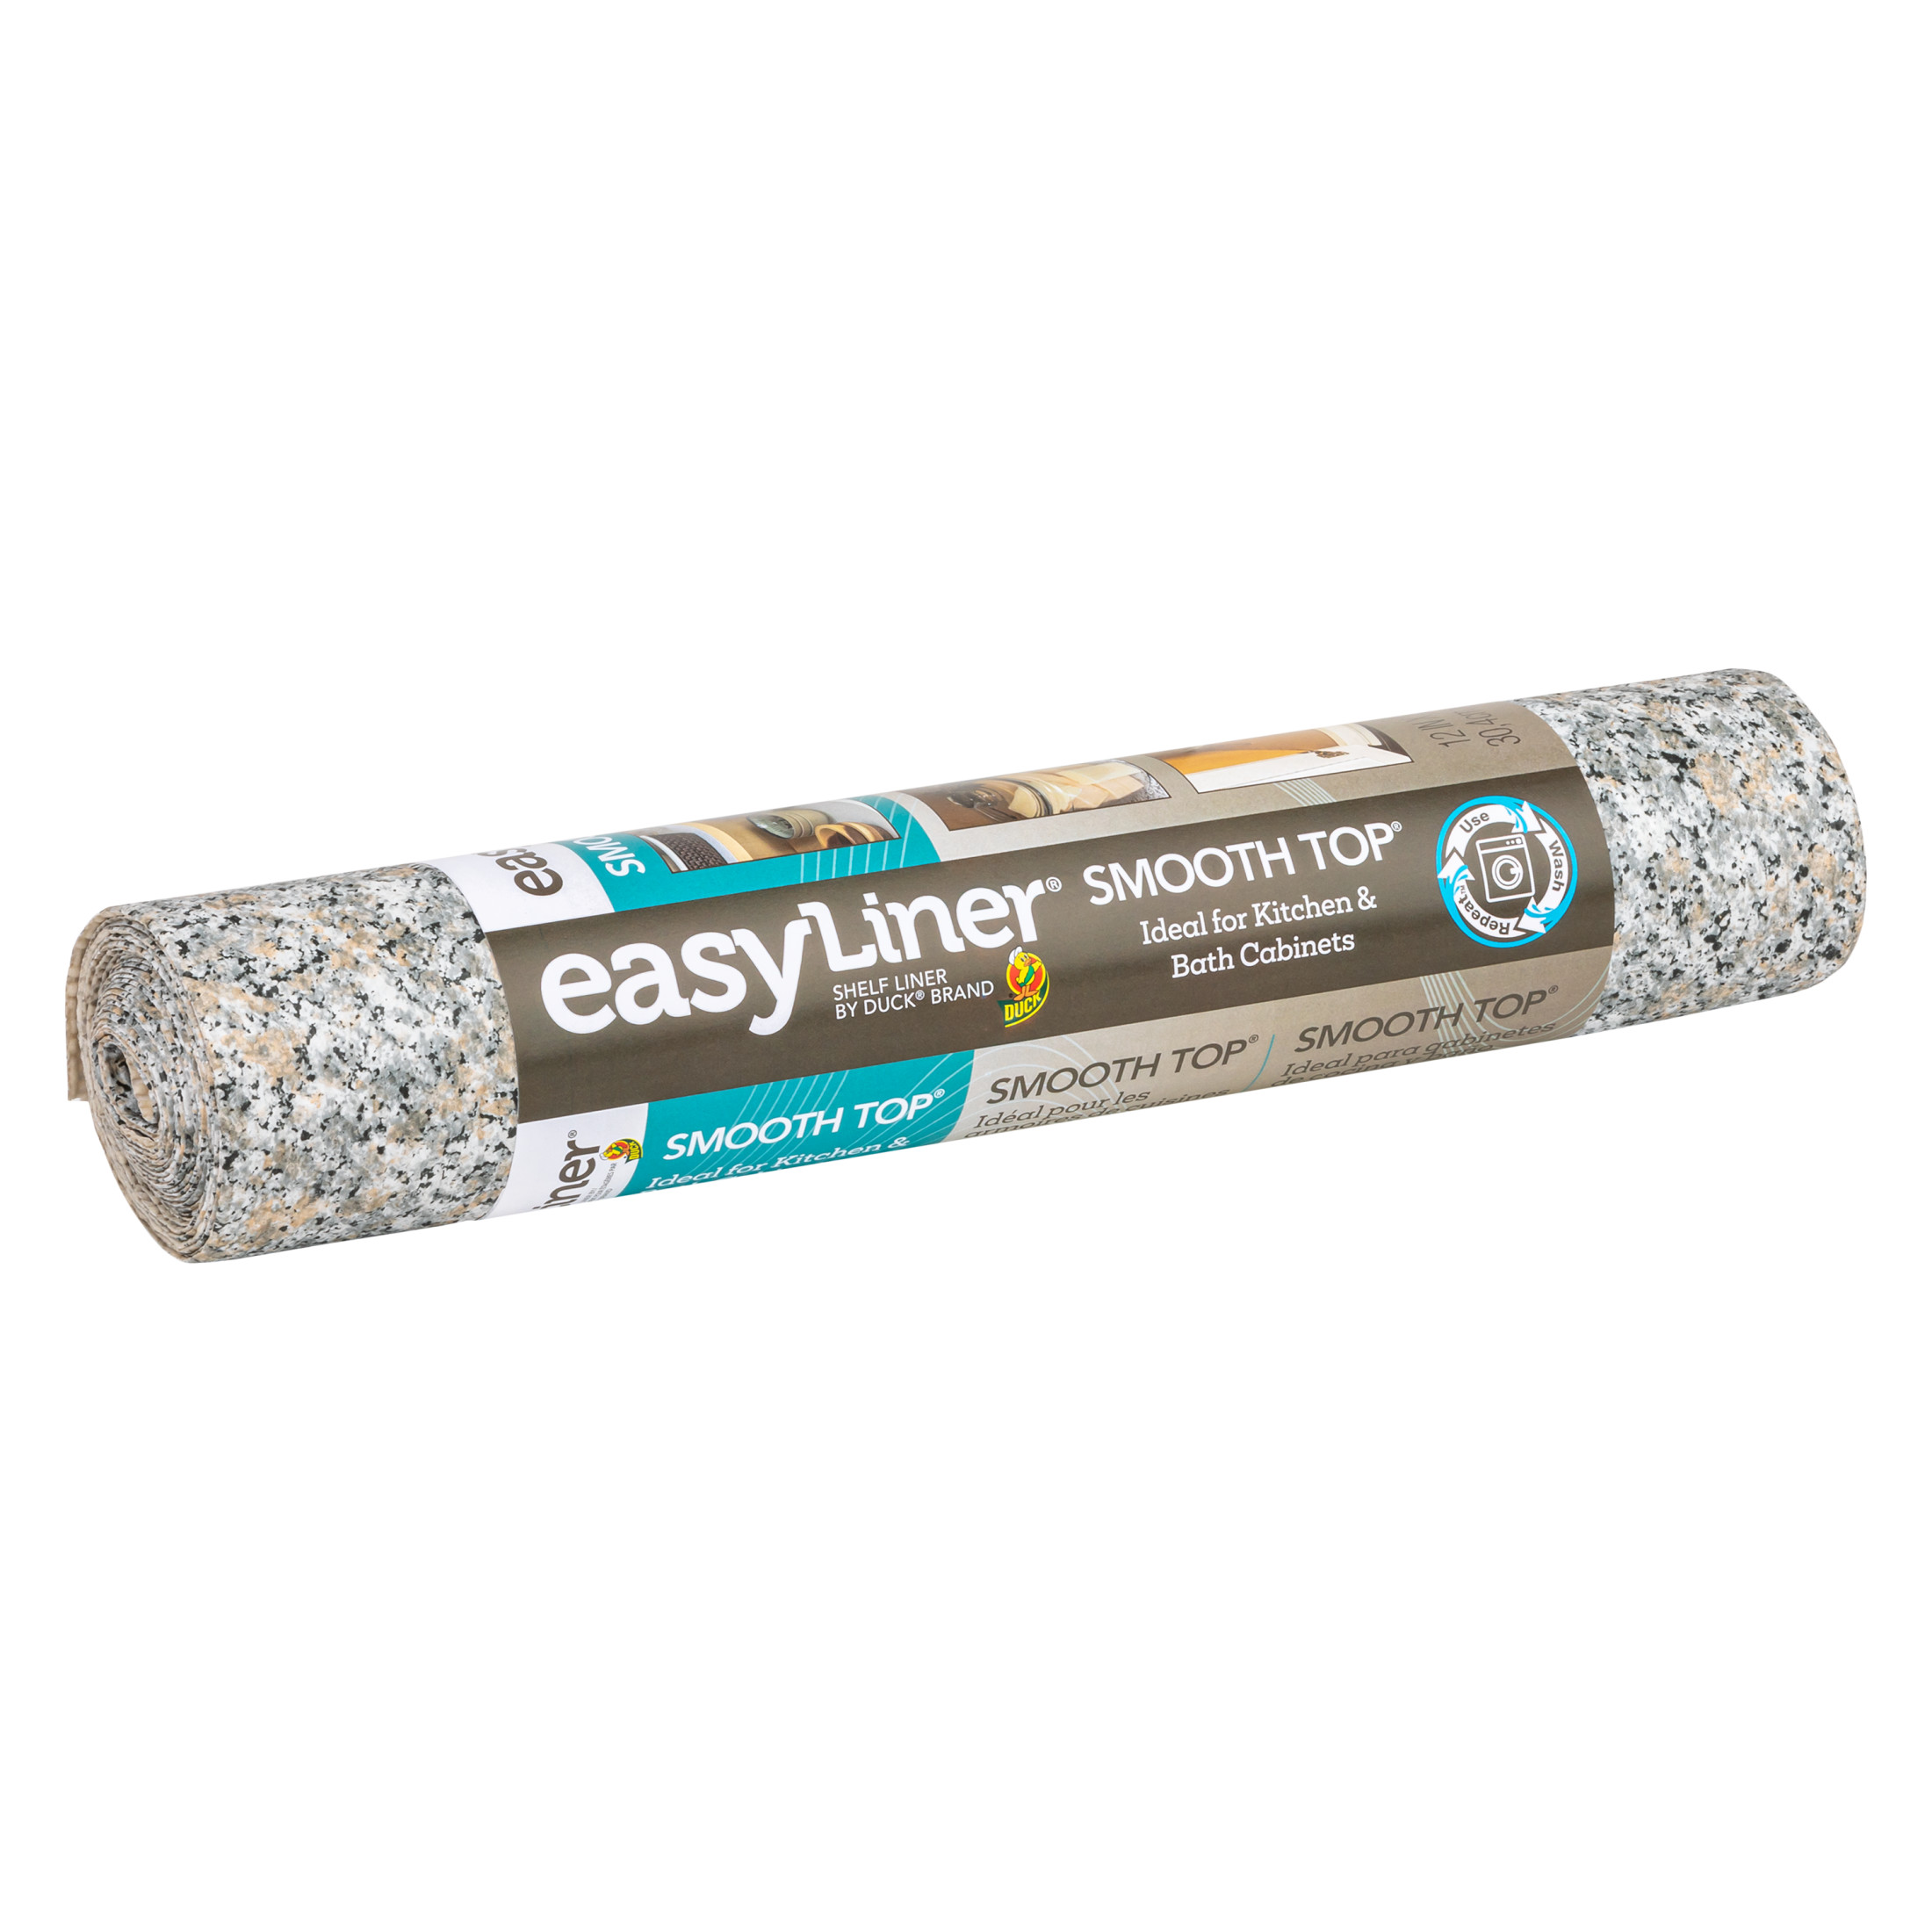 EasyLiner Smooth Top Shelf Liner, Gray Granite, 12 in. x 10 ft. Roll - image 4 of 11